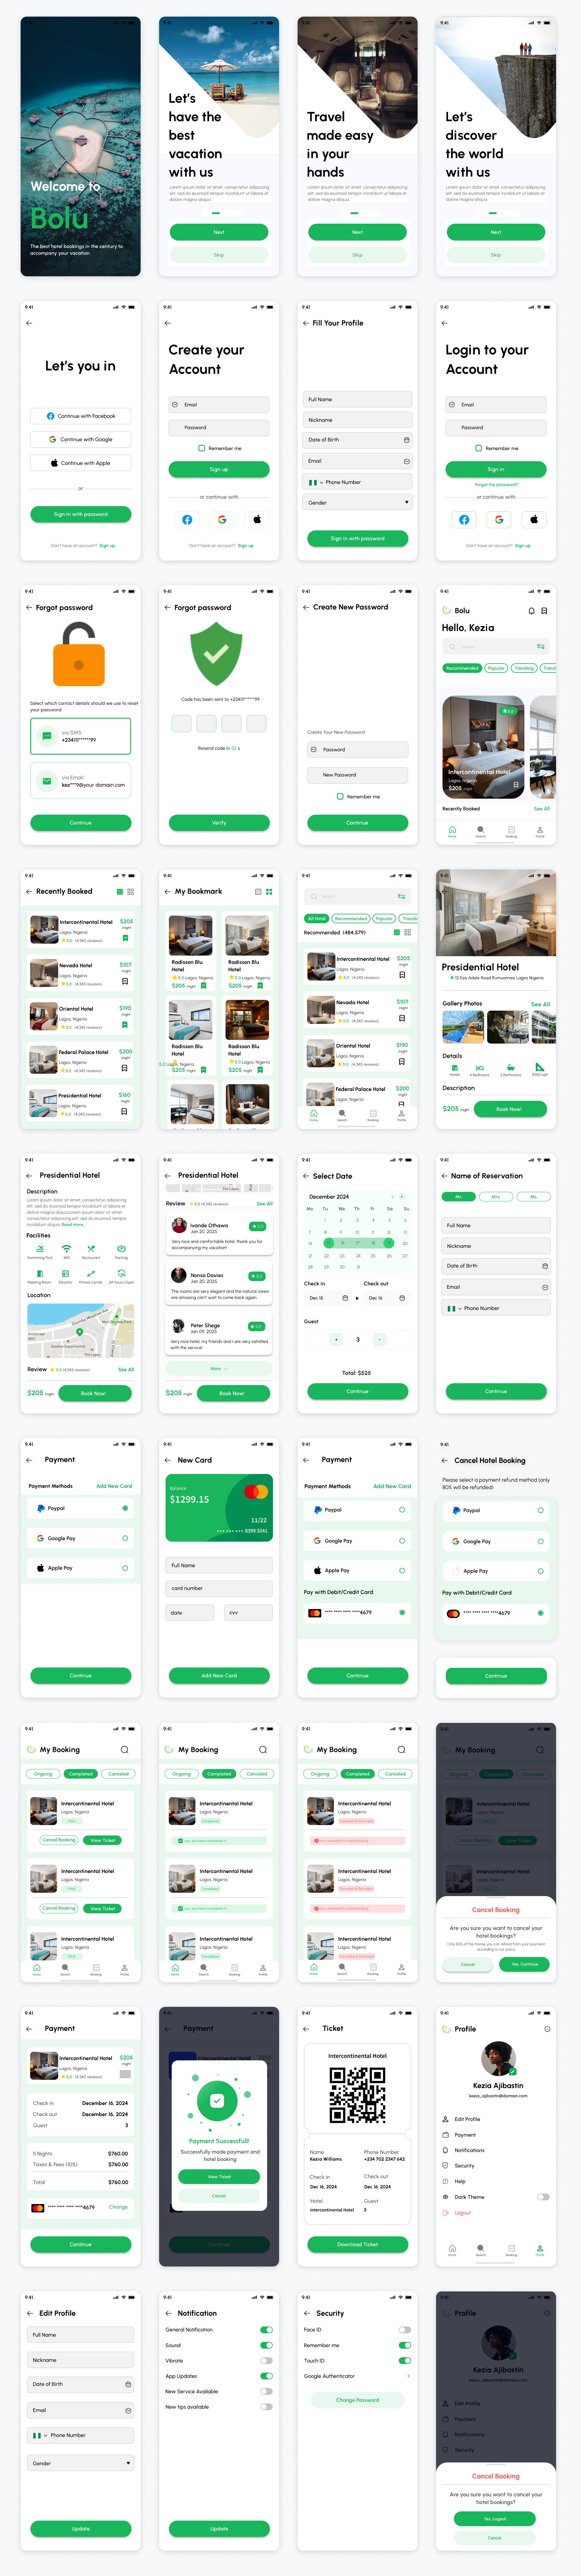 Bolu酒店预订app：2套明暗风格的UI设计系统，让预订更方便下载 figma格式-UI/UX-到位啦UI